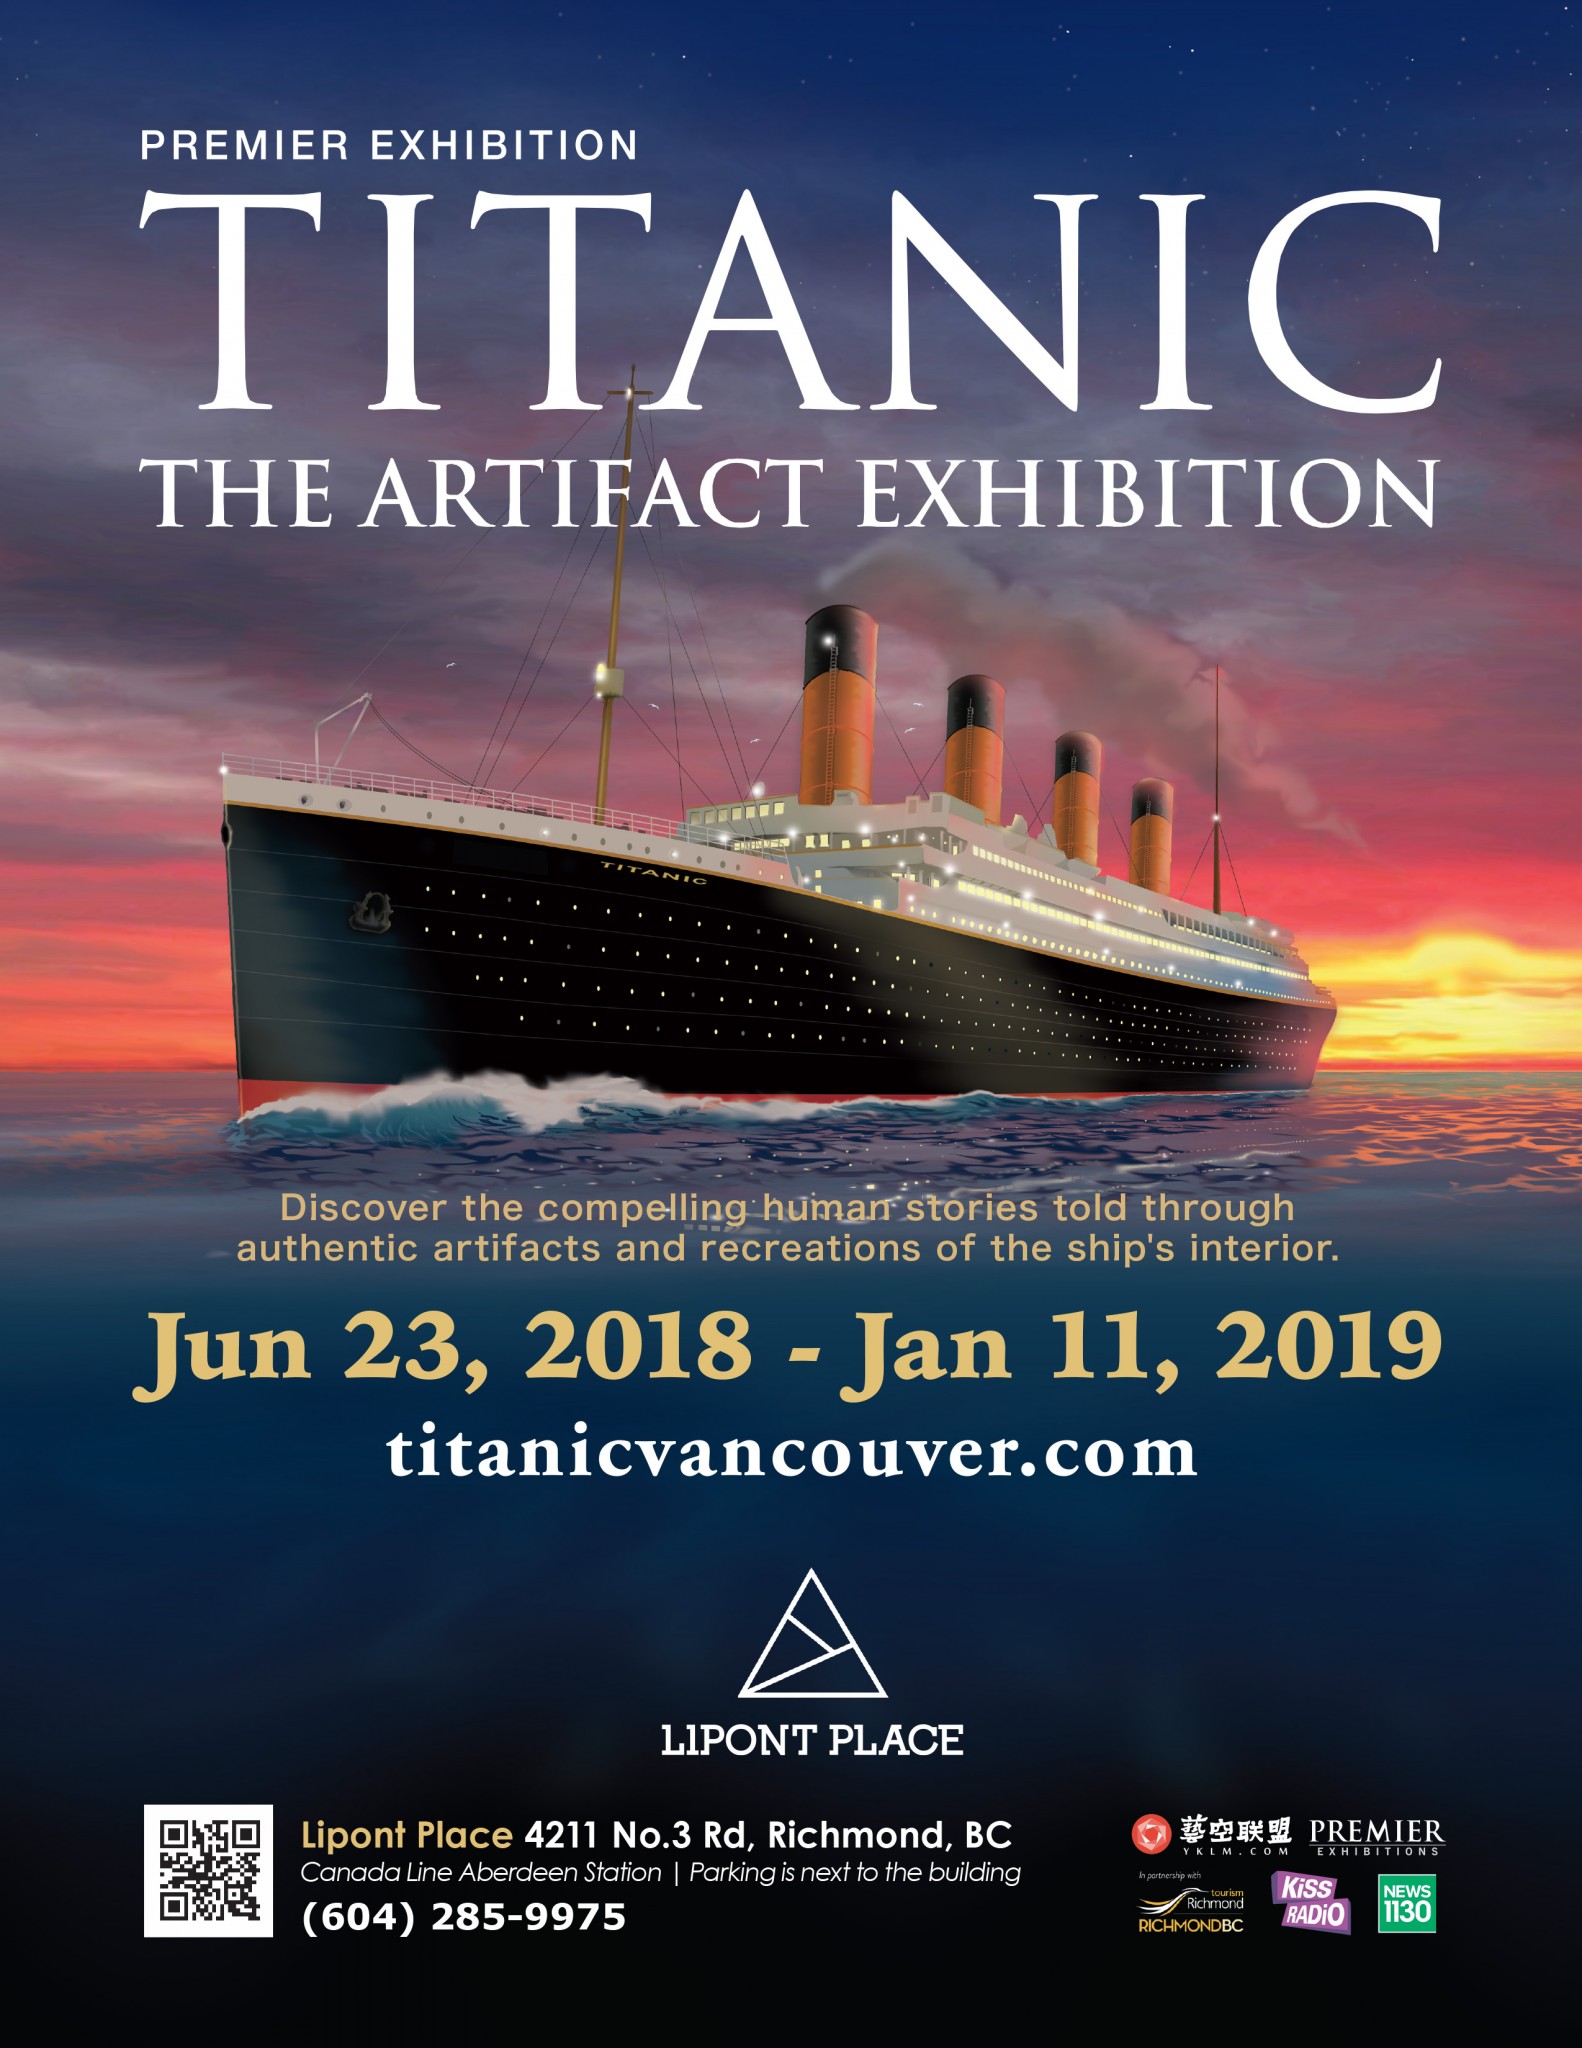 Titanic: The Artifact Exhibition at Lipont Place, Richmond | News